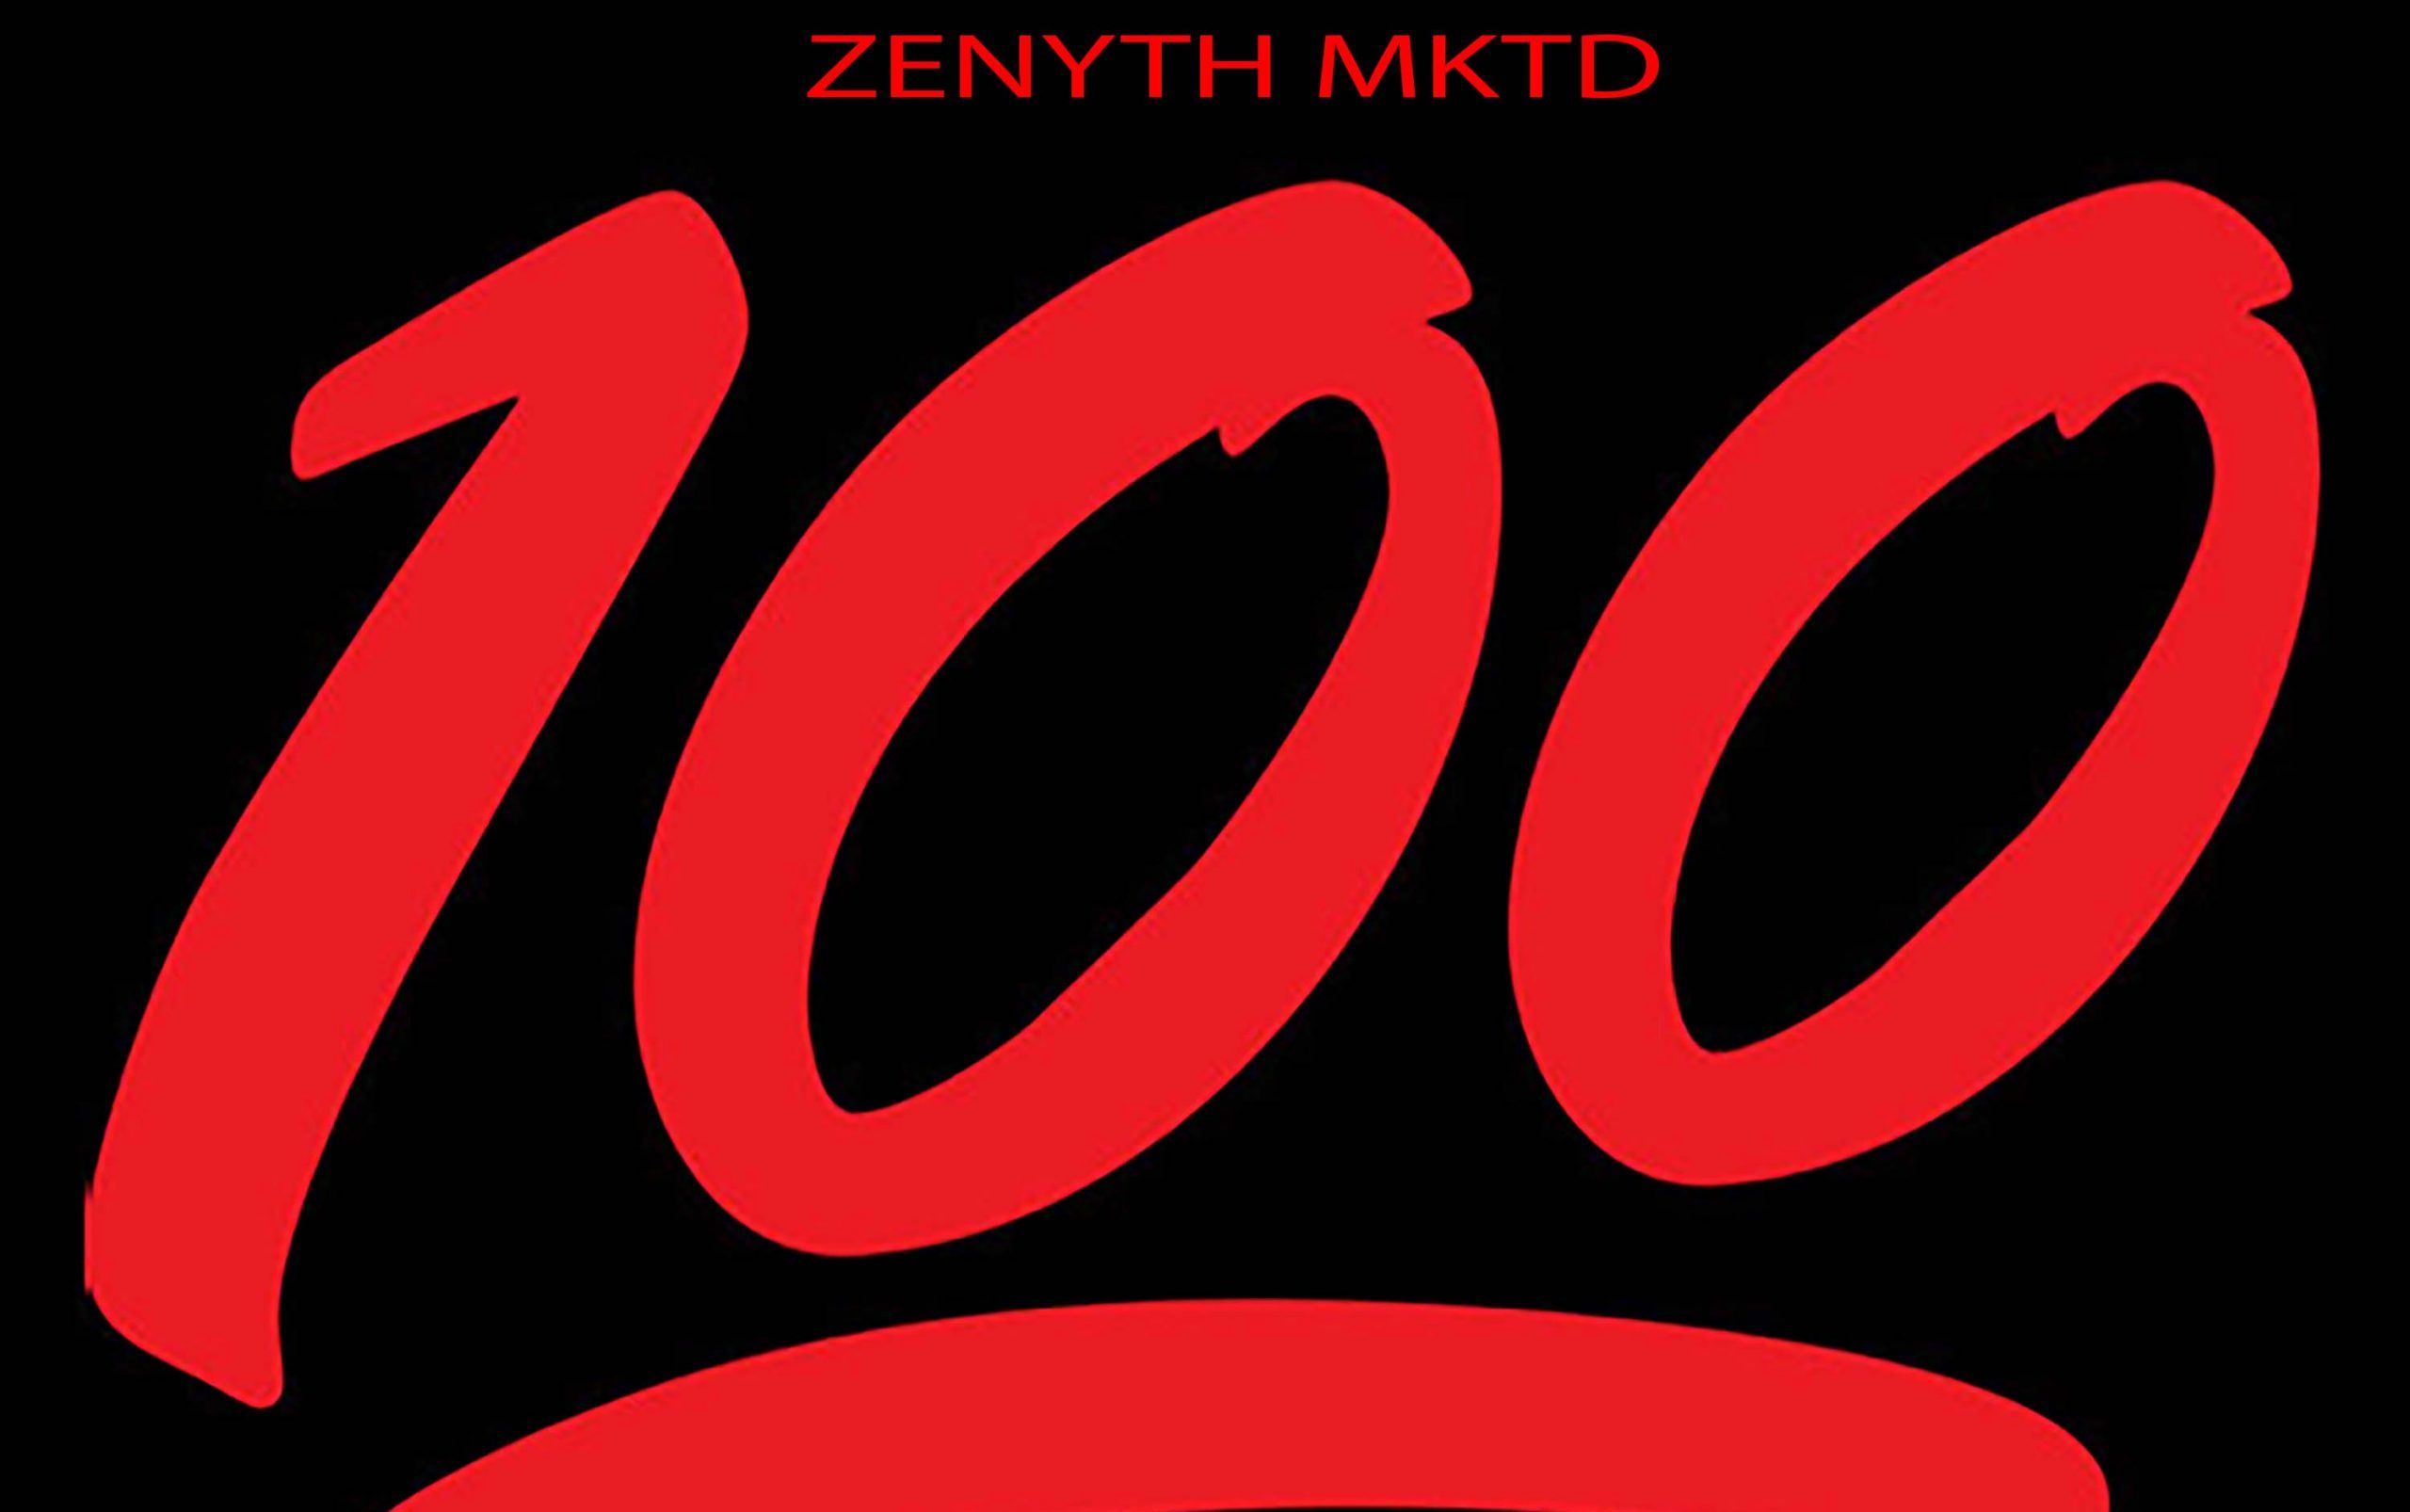 Zenyth Mktd Is Next Up From Atlanta, Georgia